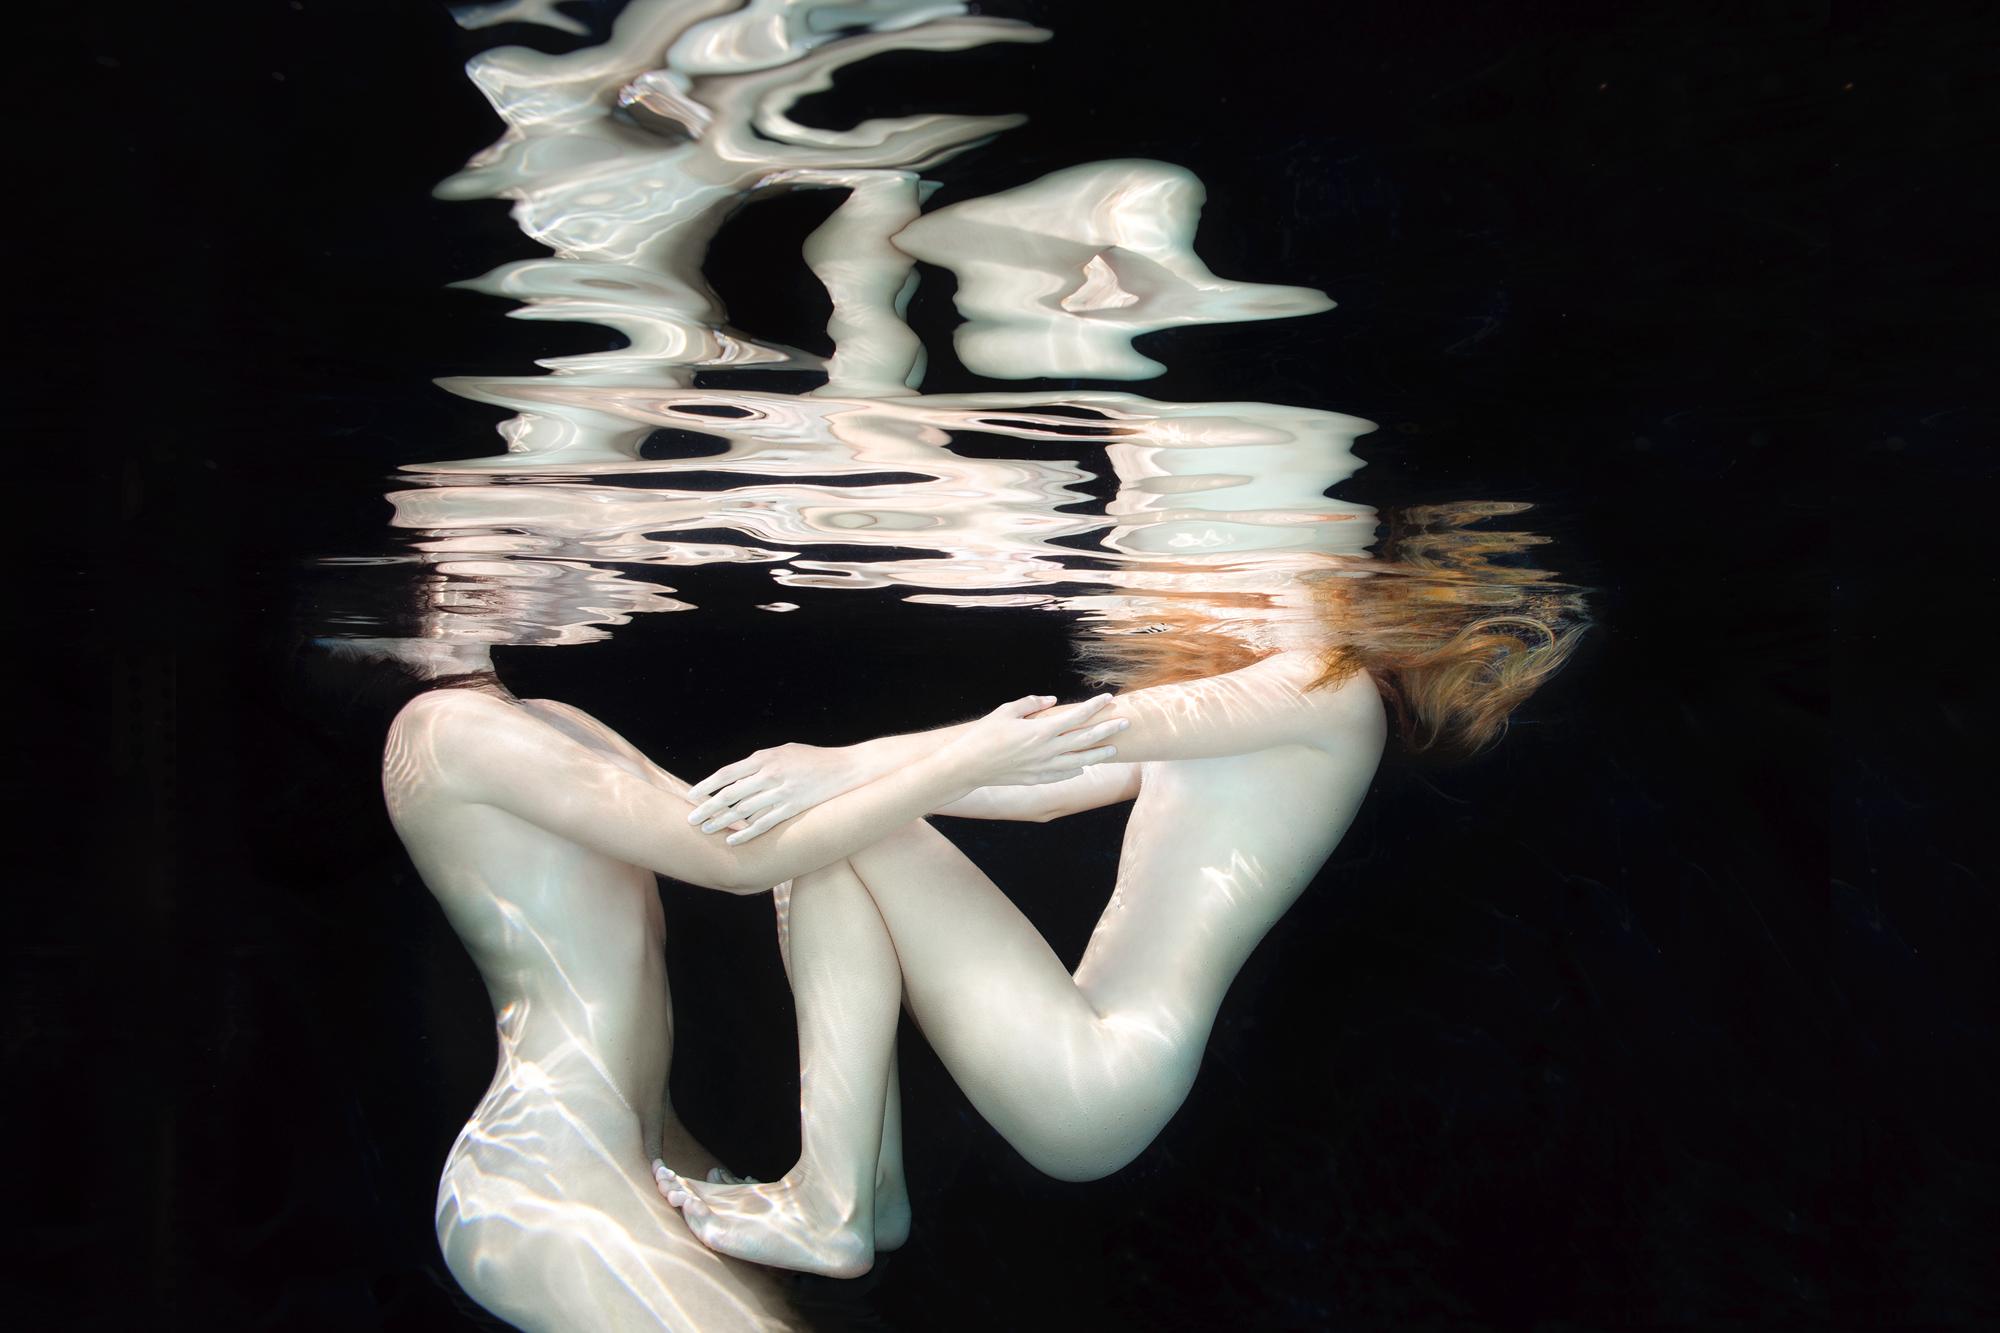 Alex Sher Figurative Photograph - Porcelain - underwater nude photograph - print on aluminum 24" х 36"